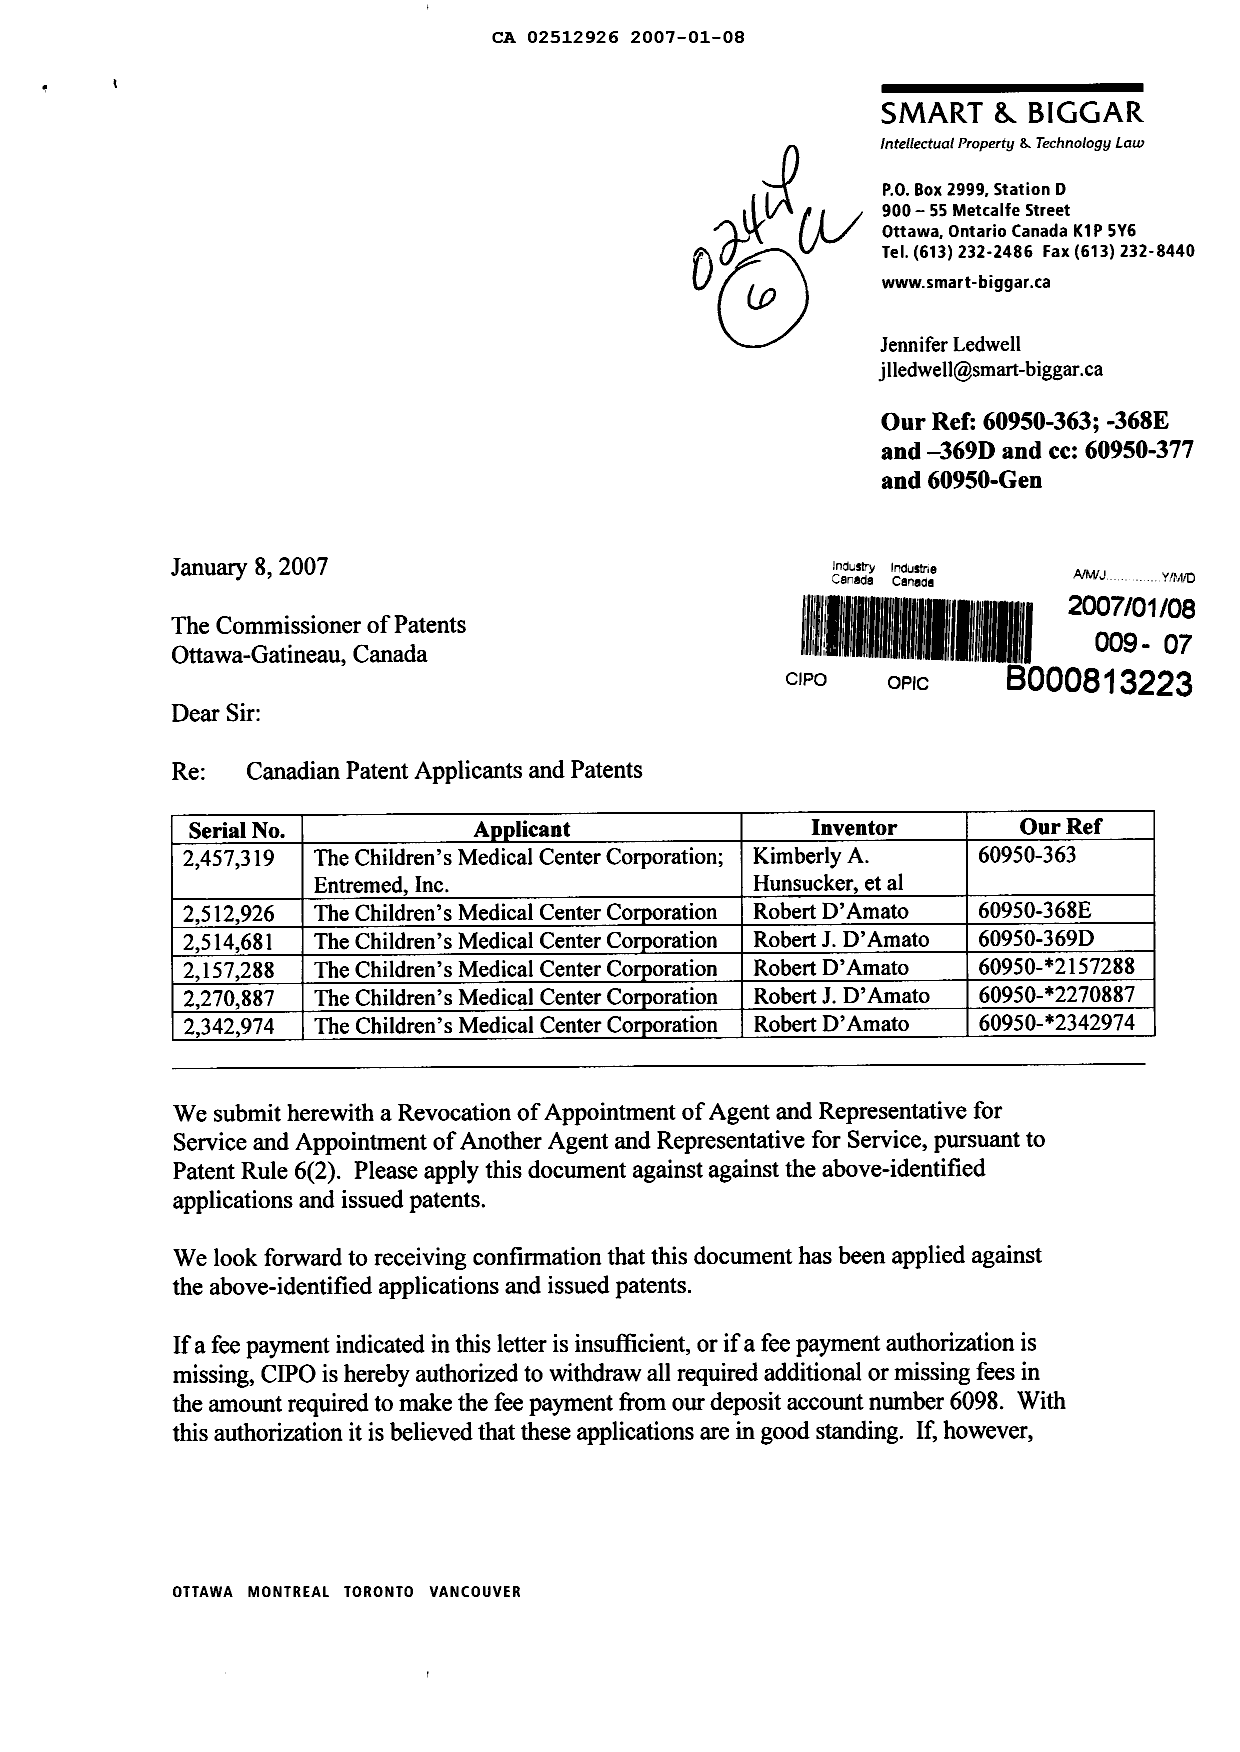 Canadian Patent Document 2157288. Correspondence 20070108. Image 1 of 4